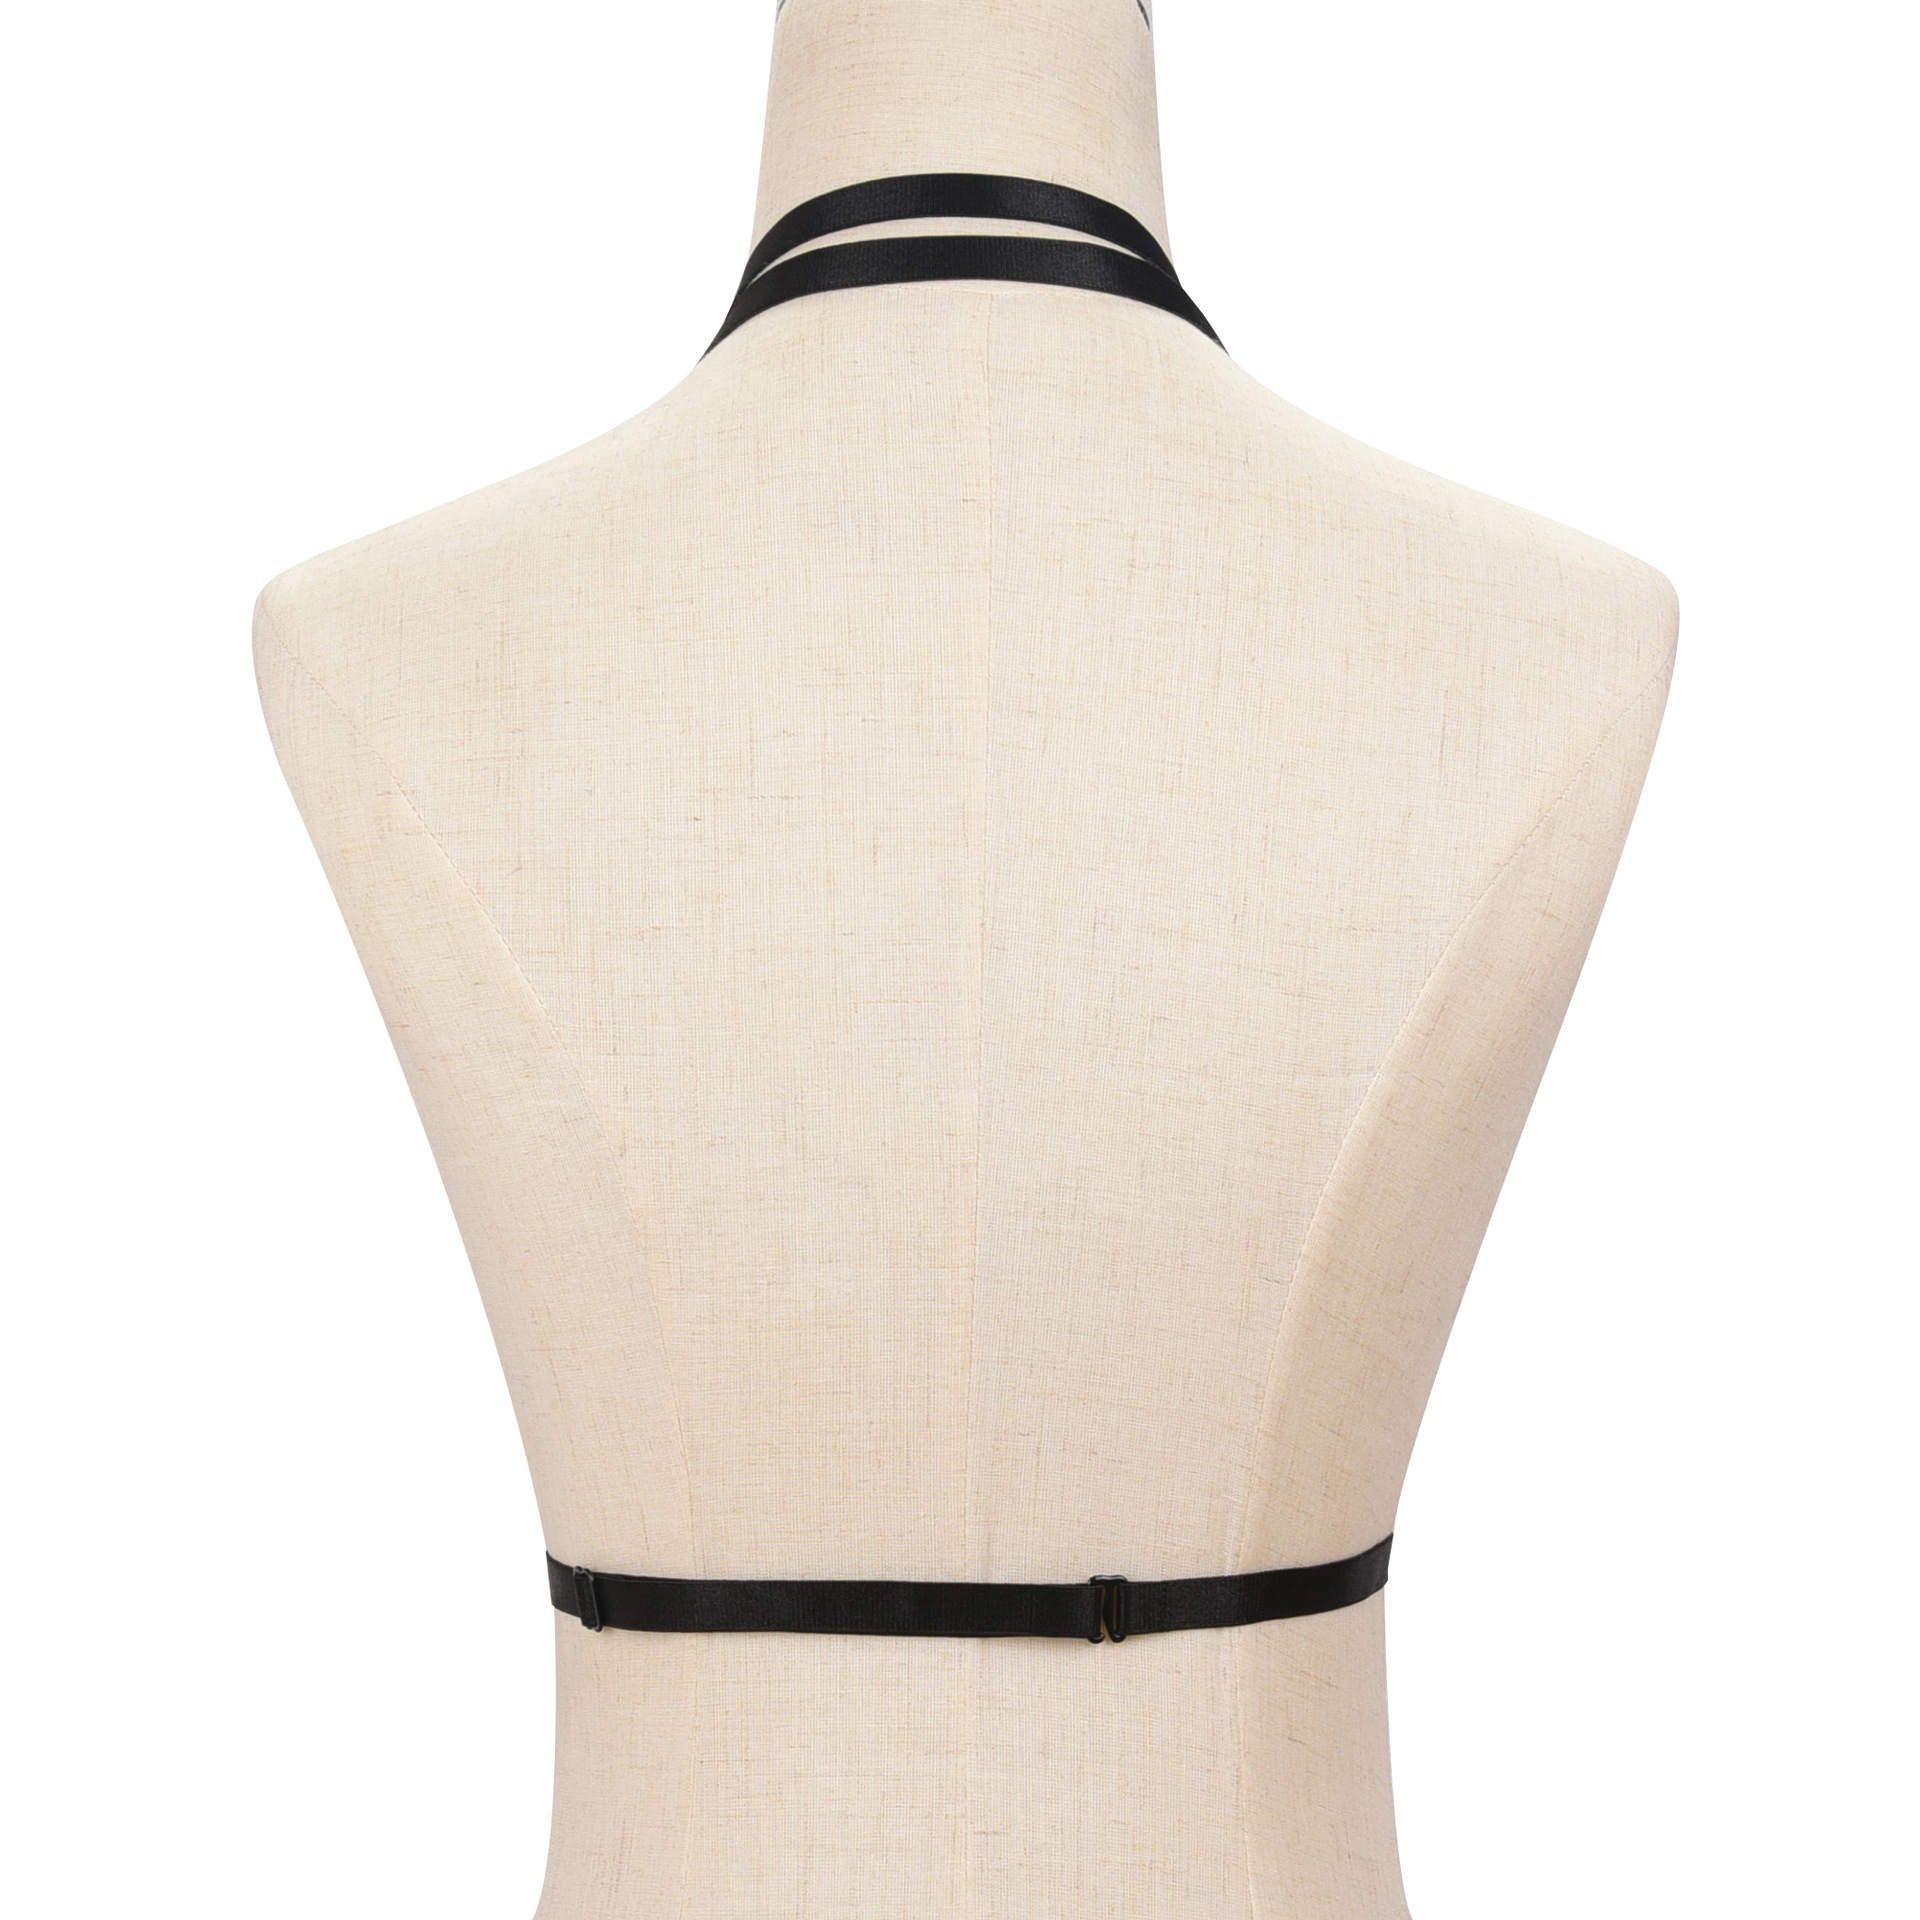 O0419--Hot selling black elastic band bra harness strap bra